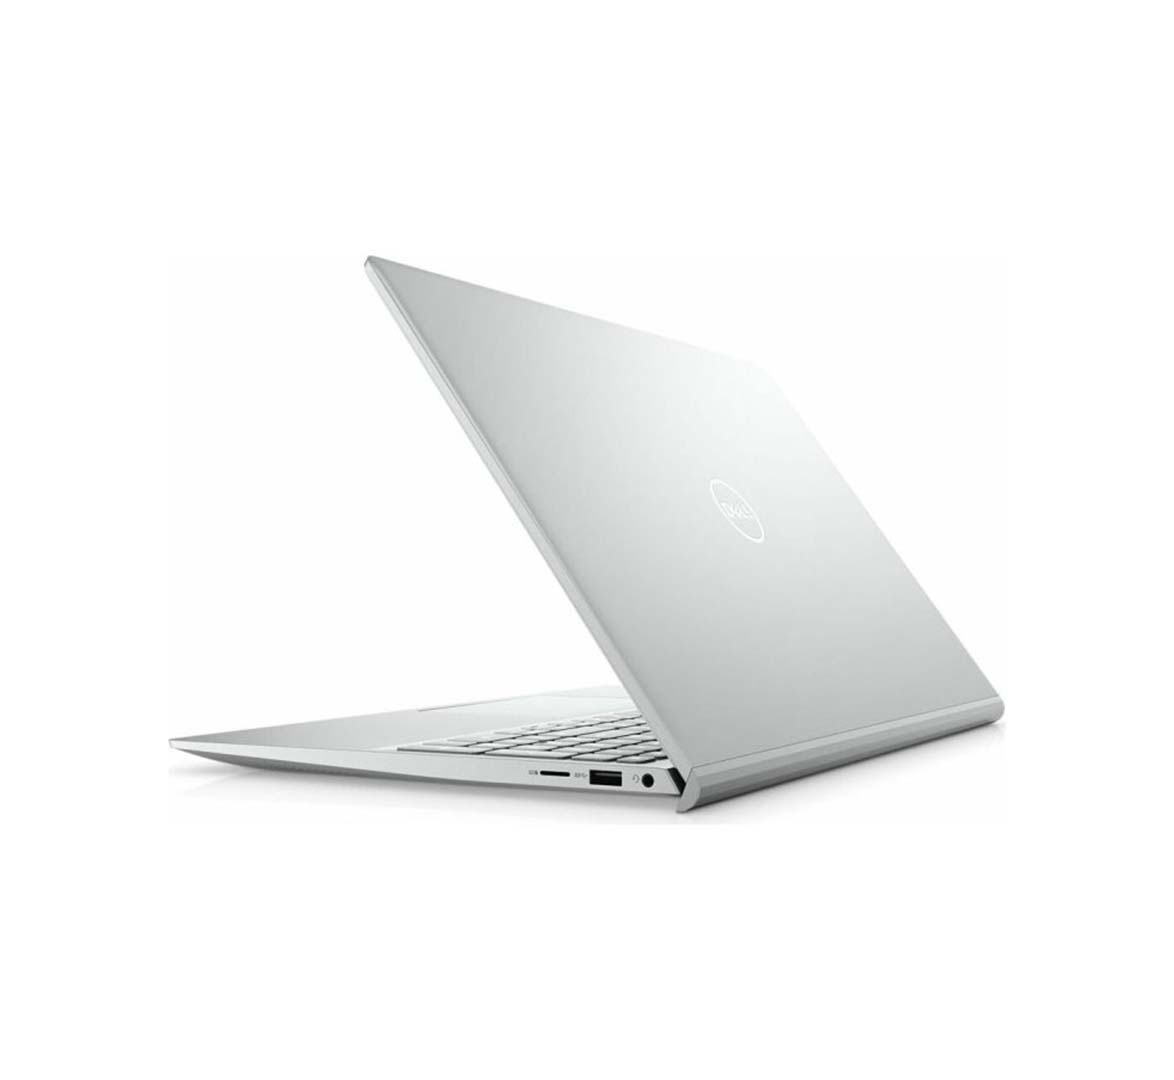 Dell Inspiron 14 5401 Business Laptop, Intel Core i7-10th Generation CPU, 8GB RAM, 256GB SSD , 14 inch Display, Windows 10 Pro